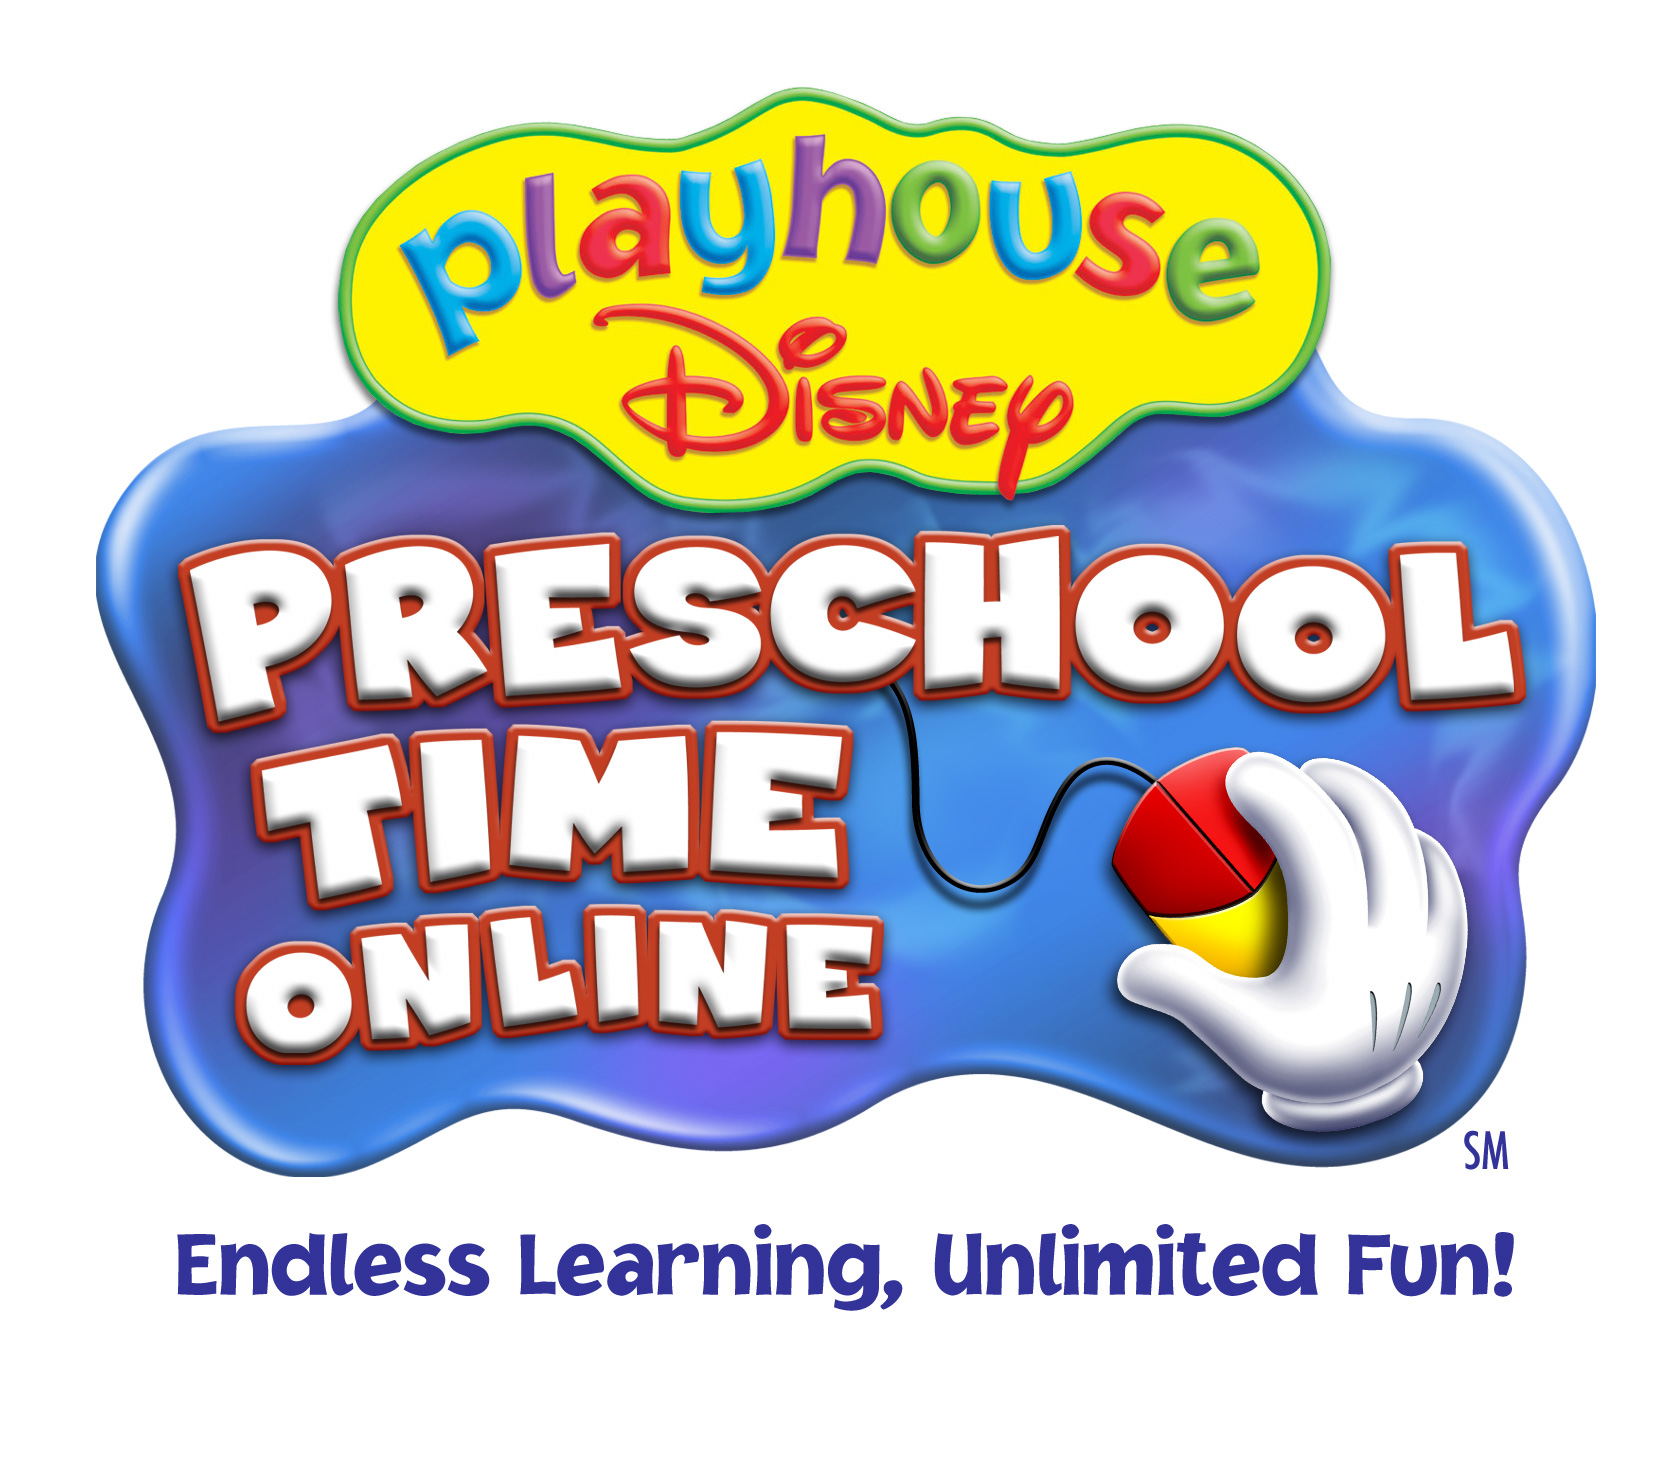 Playhouse Disney Preschool Time Online image